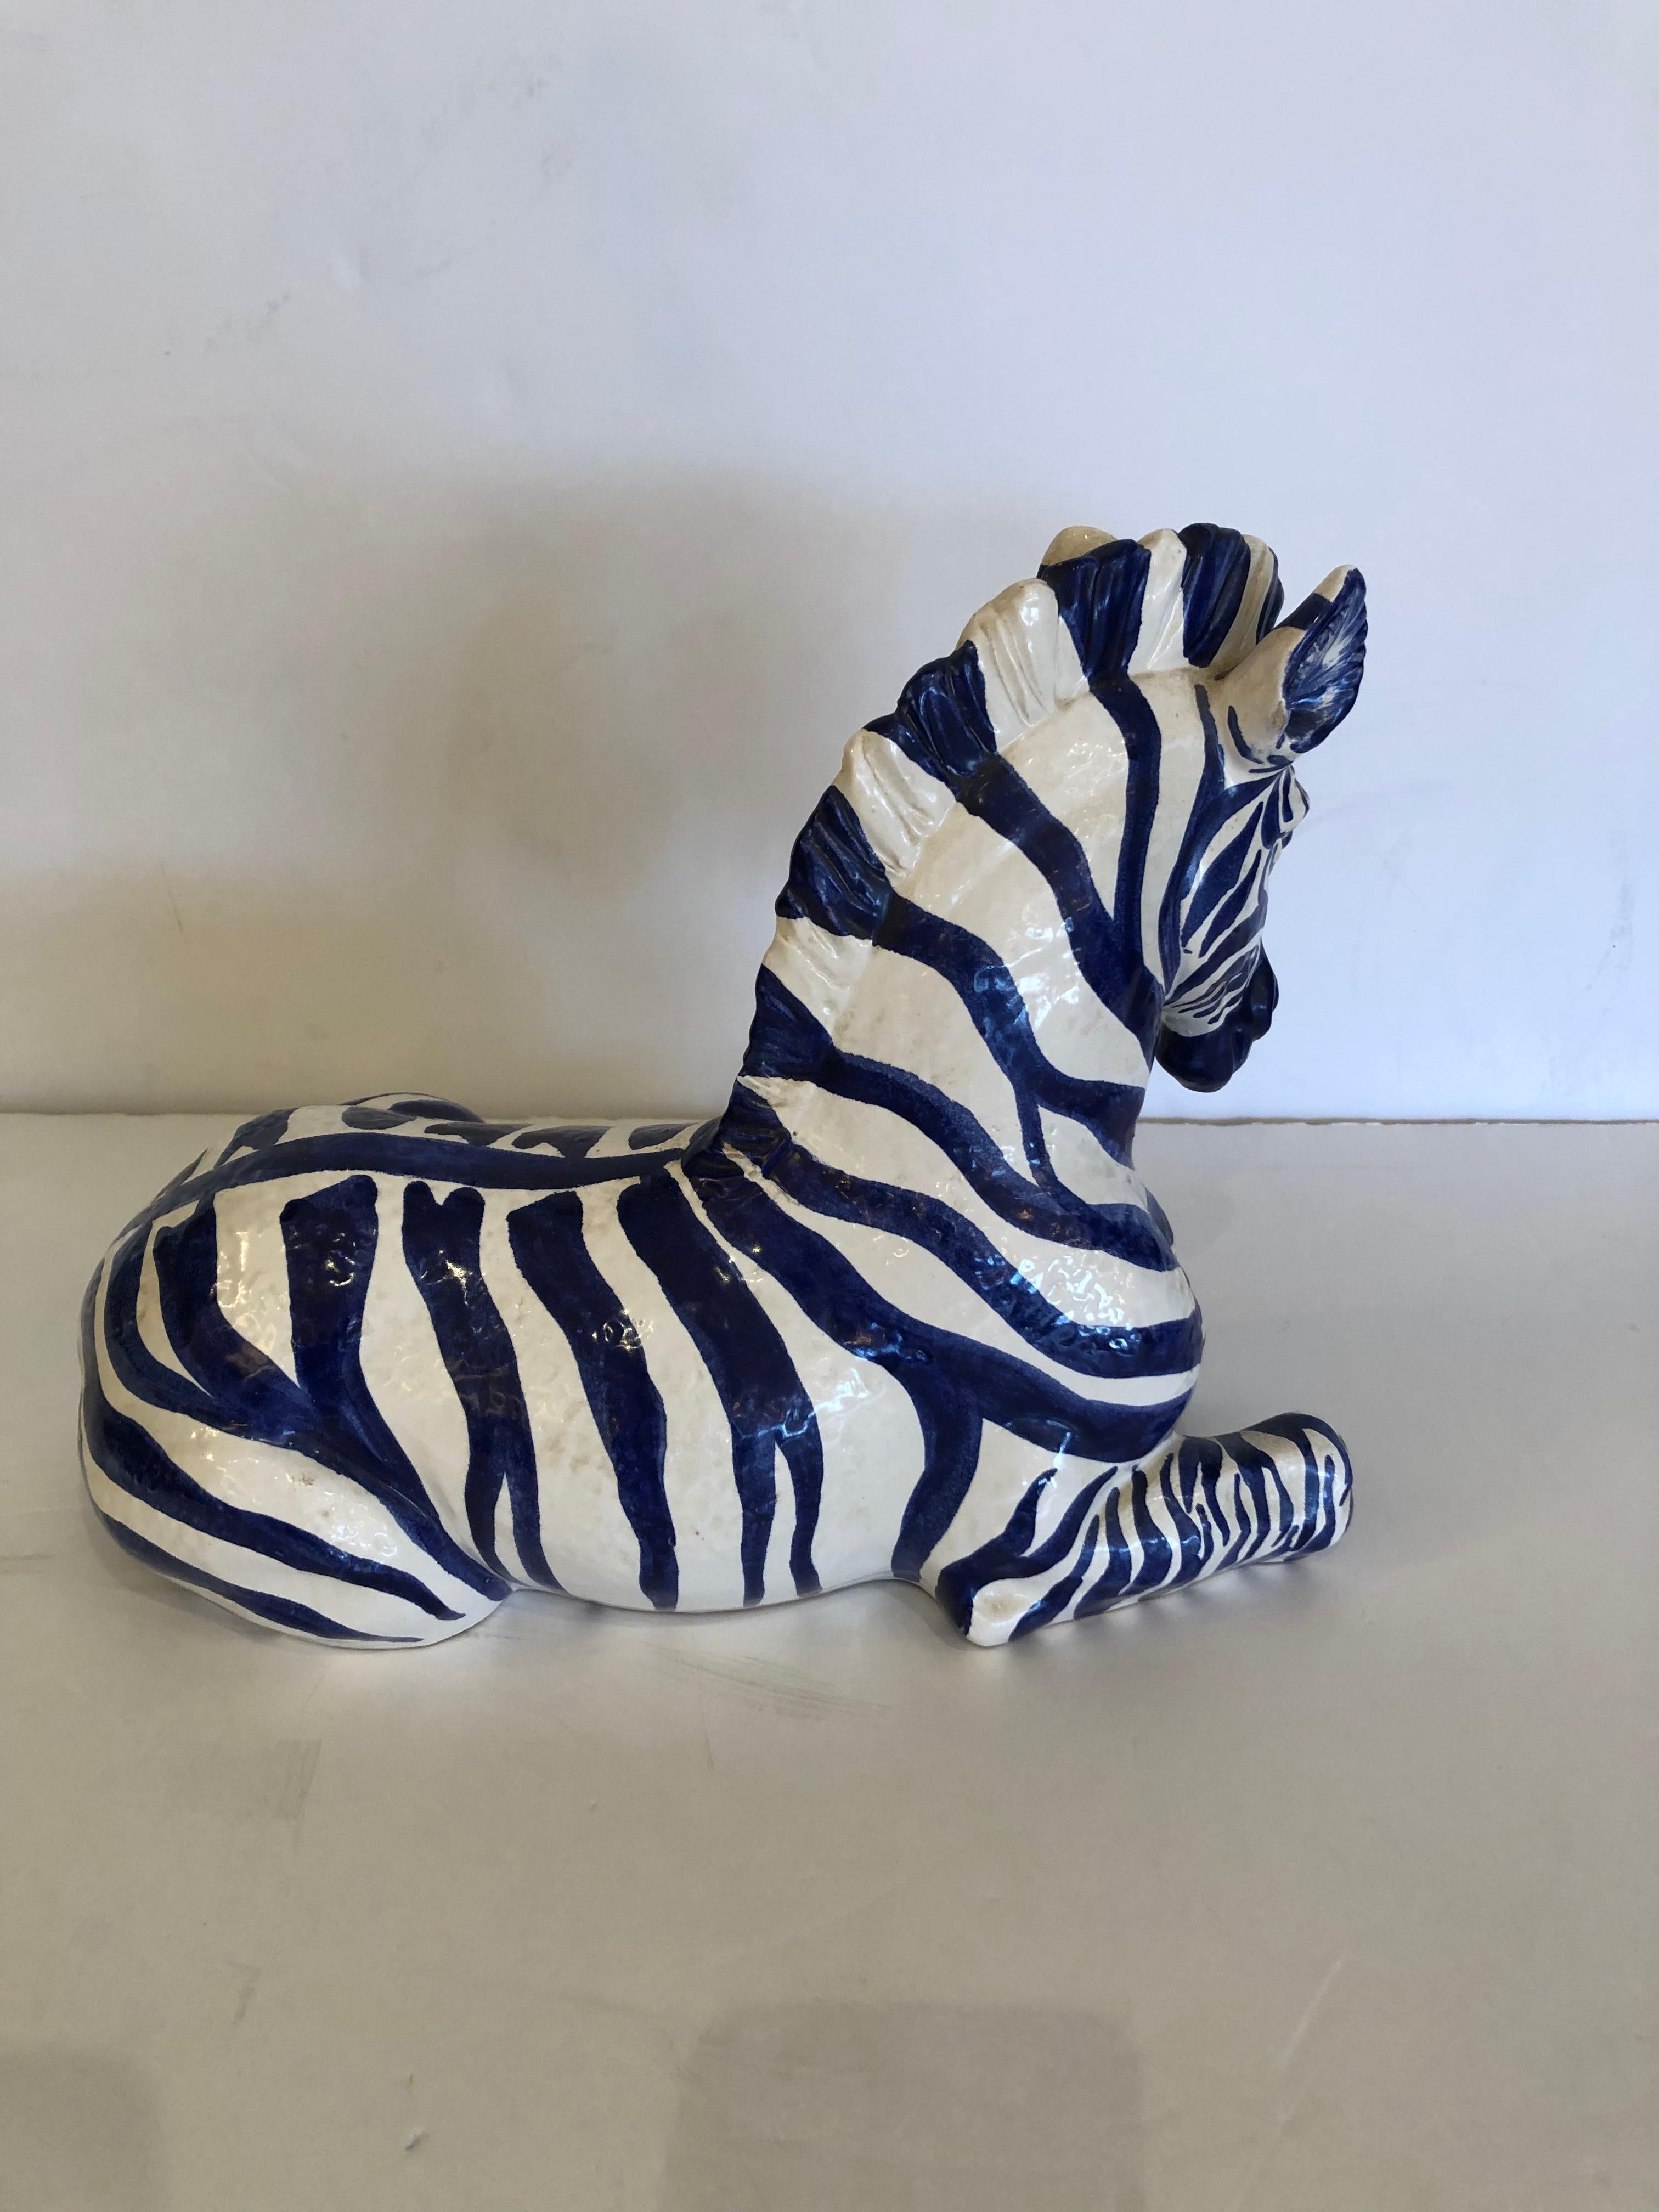 Mid-20th Century Rare Navy Blue and White Italian Ceramic Zebra Sculpture